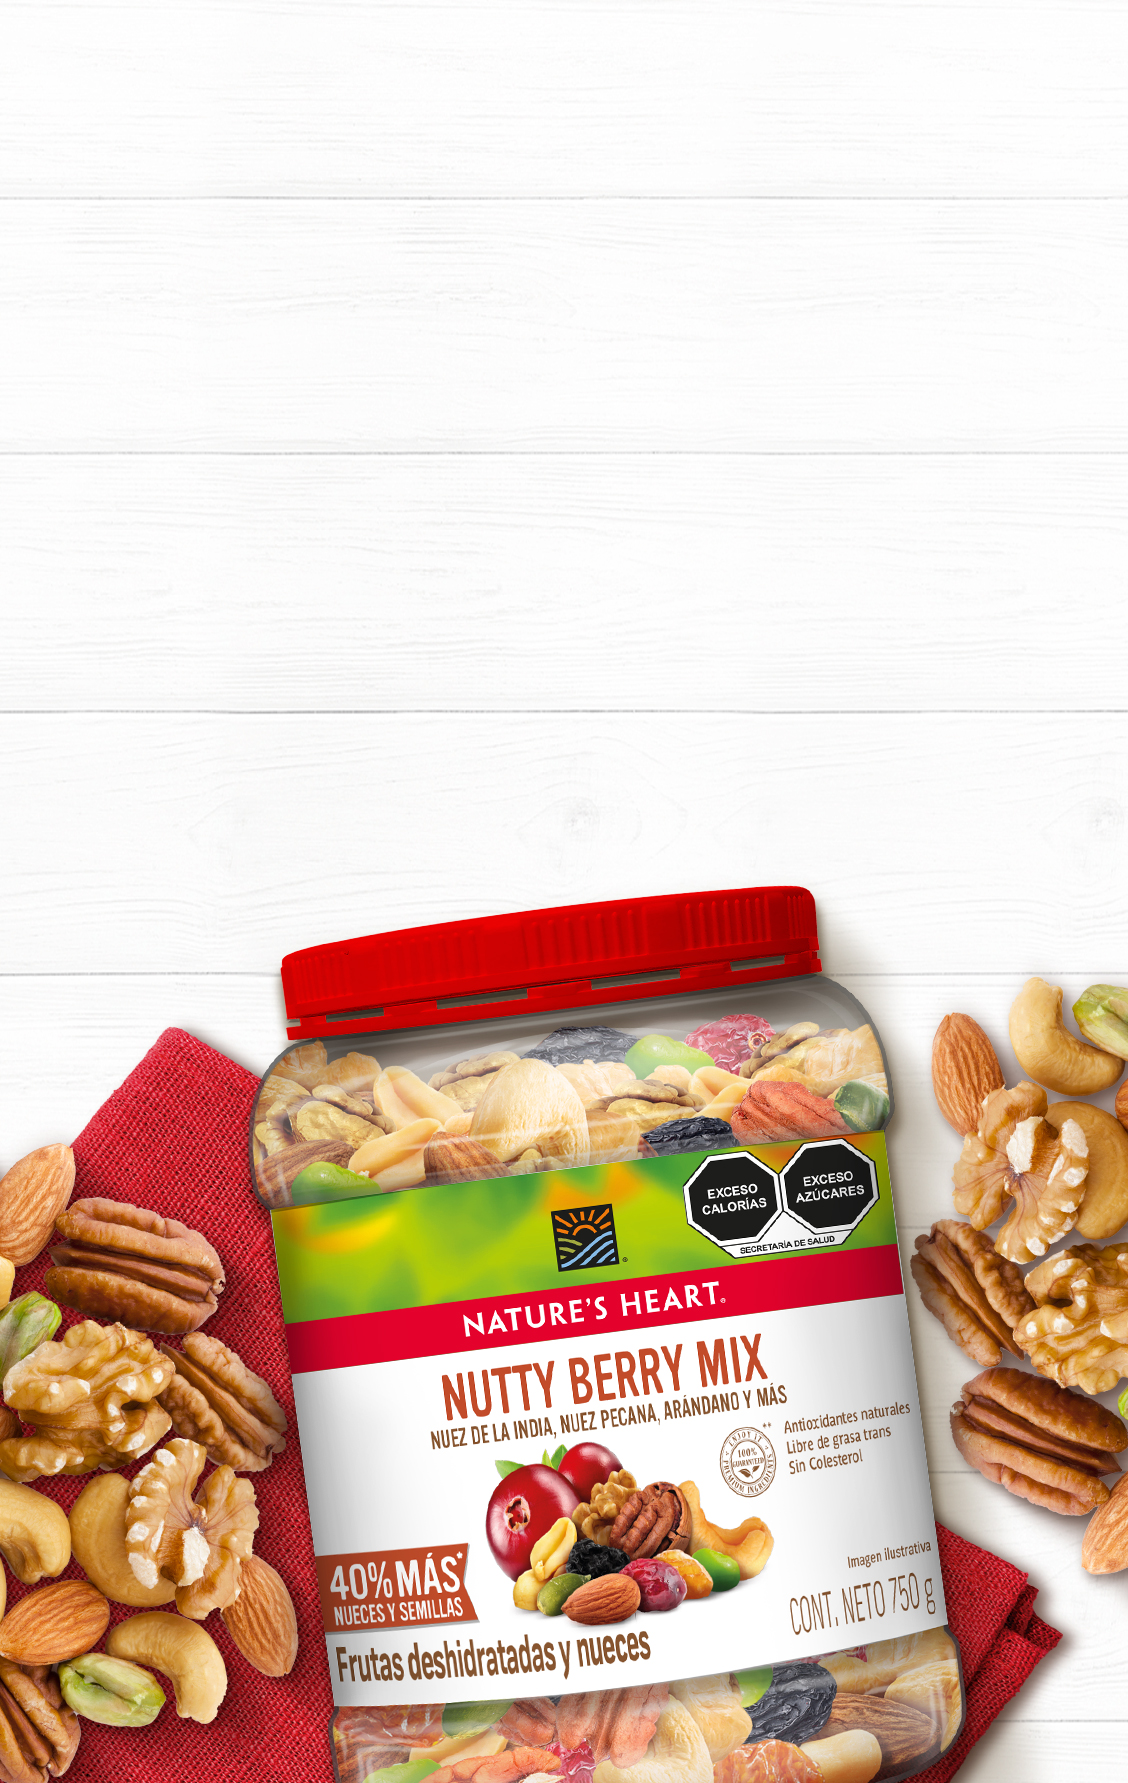 nutty-berry-mix-750g-sams-club-mobile